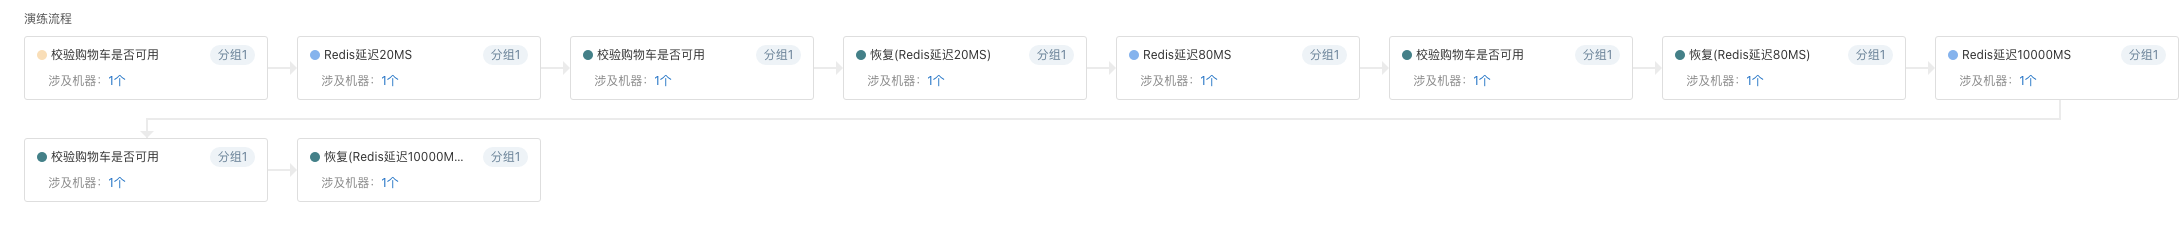 Redis5 完整演练流程.png